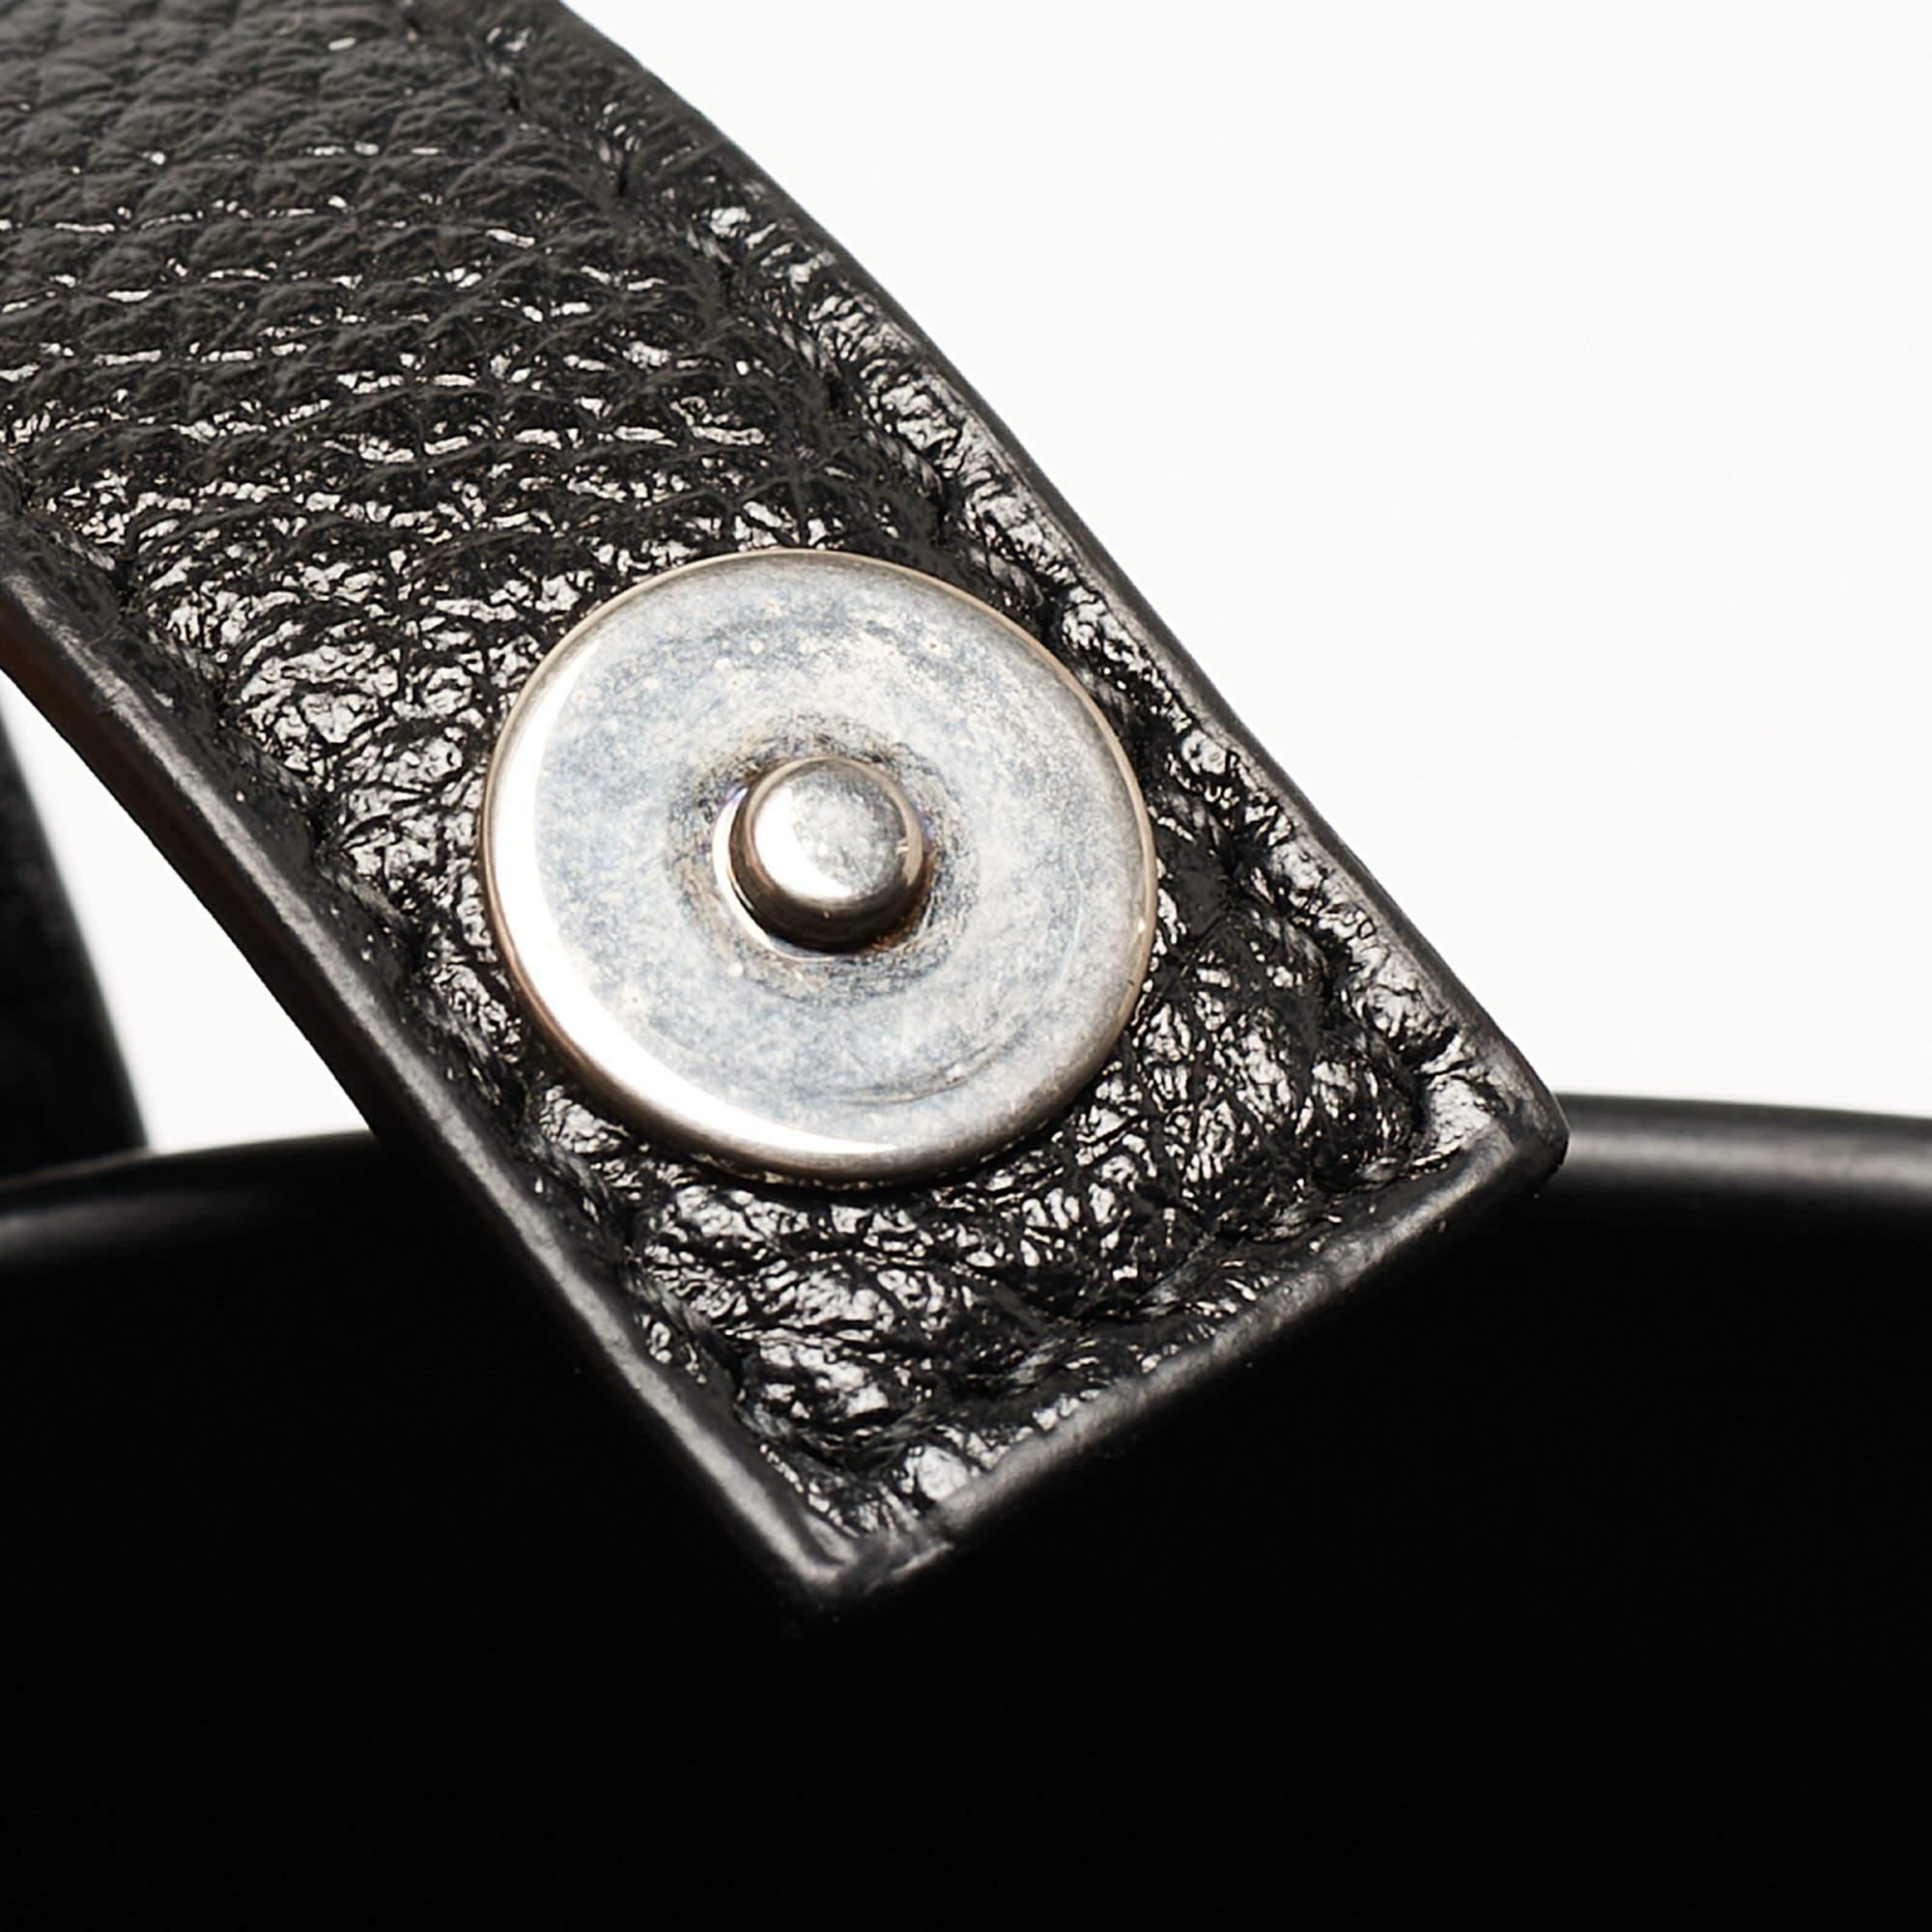 Balenciaga Black Leather Hourglass East-West Tote In Good Condition For Sale In Dubai, Al Qouz 2